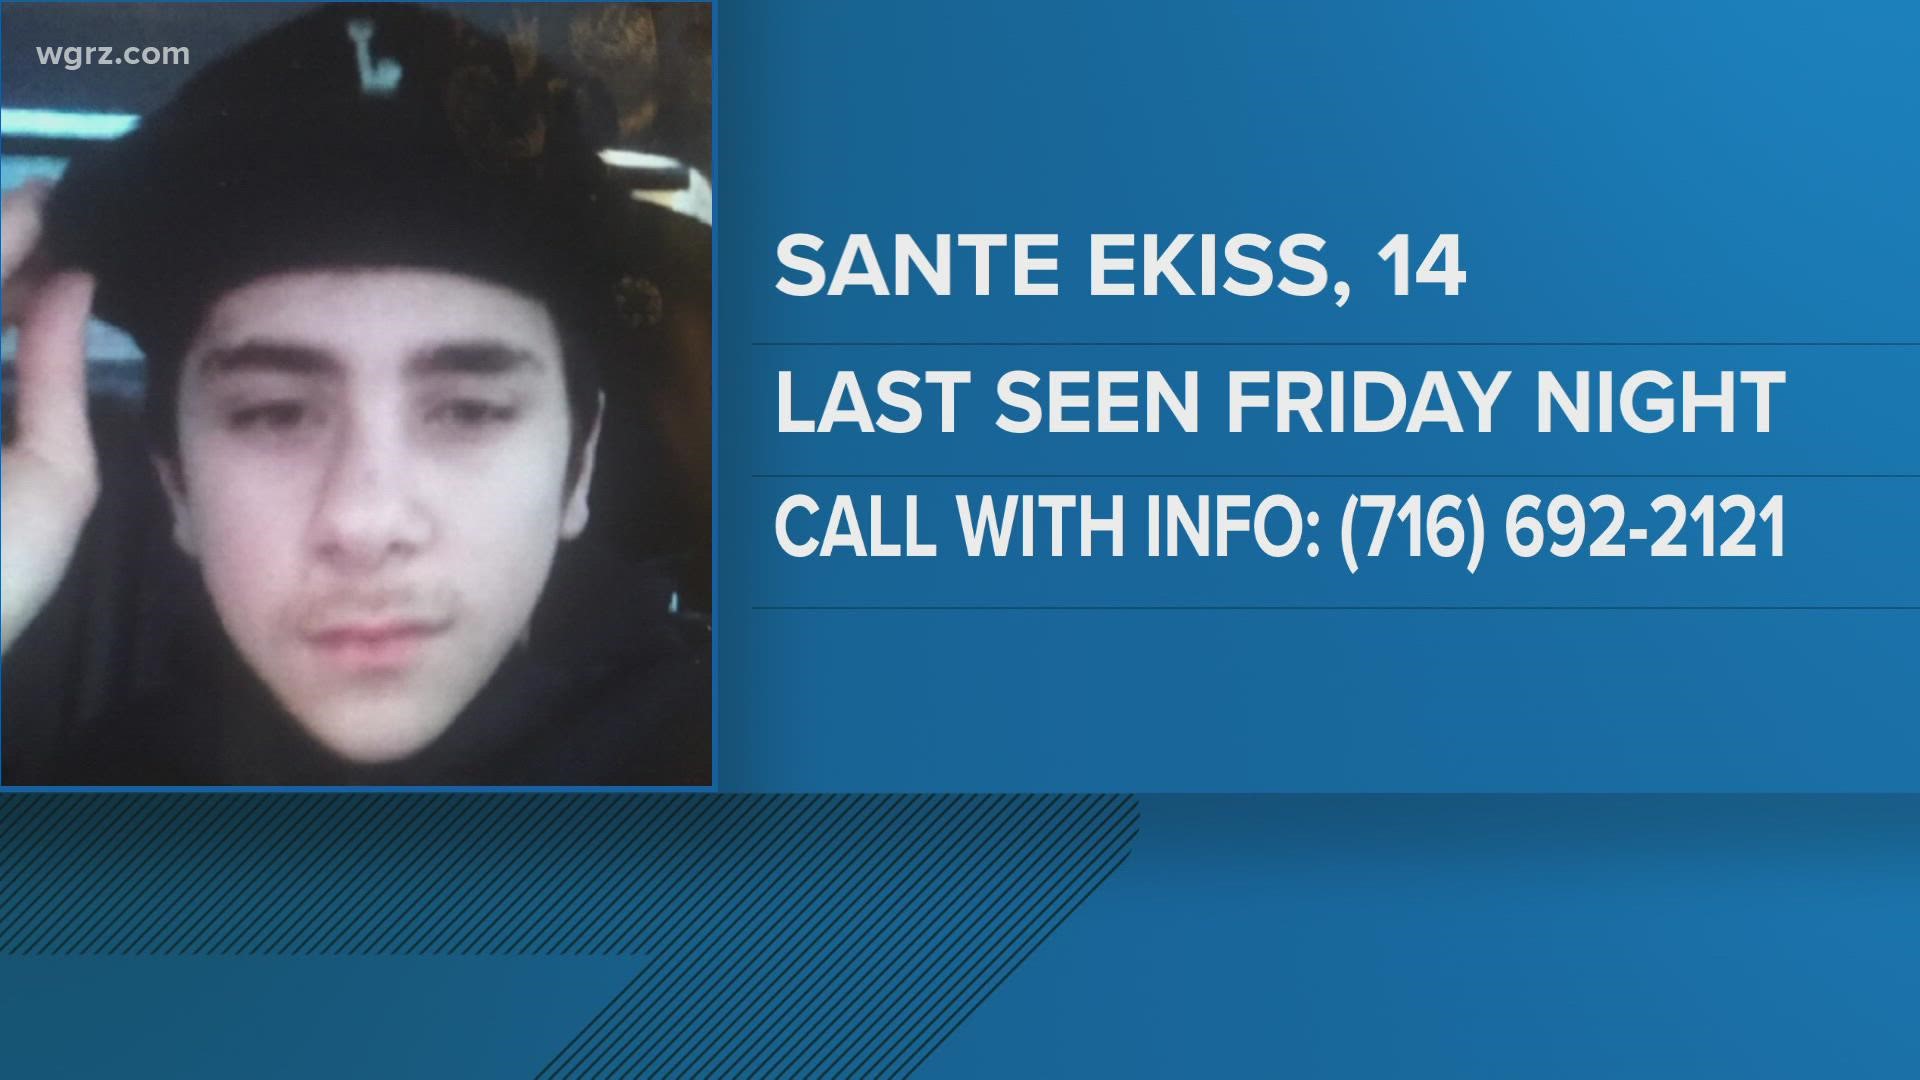 City of Tonawanda police are searching for 14 year old Sante Ekiss. He was last seen on Friday night near Niagara Falls Boulevard and Tonawanda Creek Road.